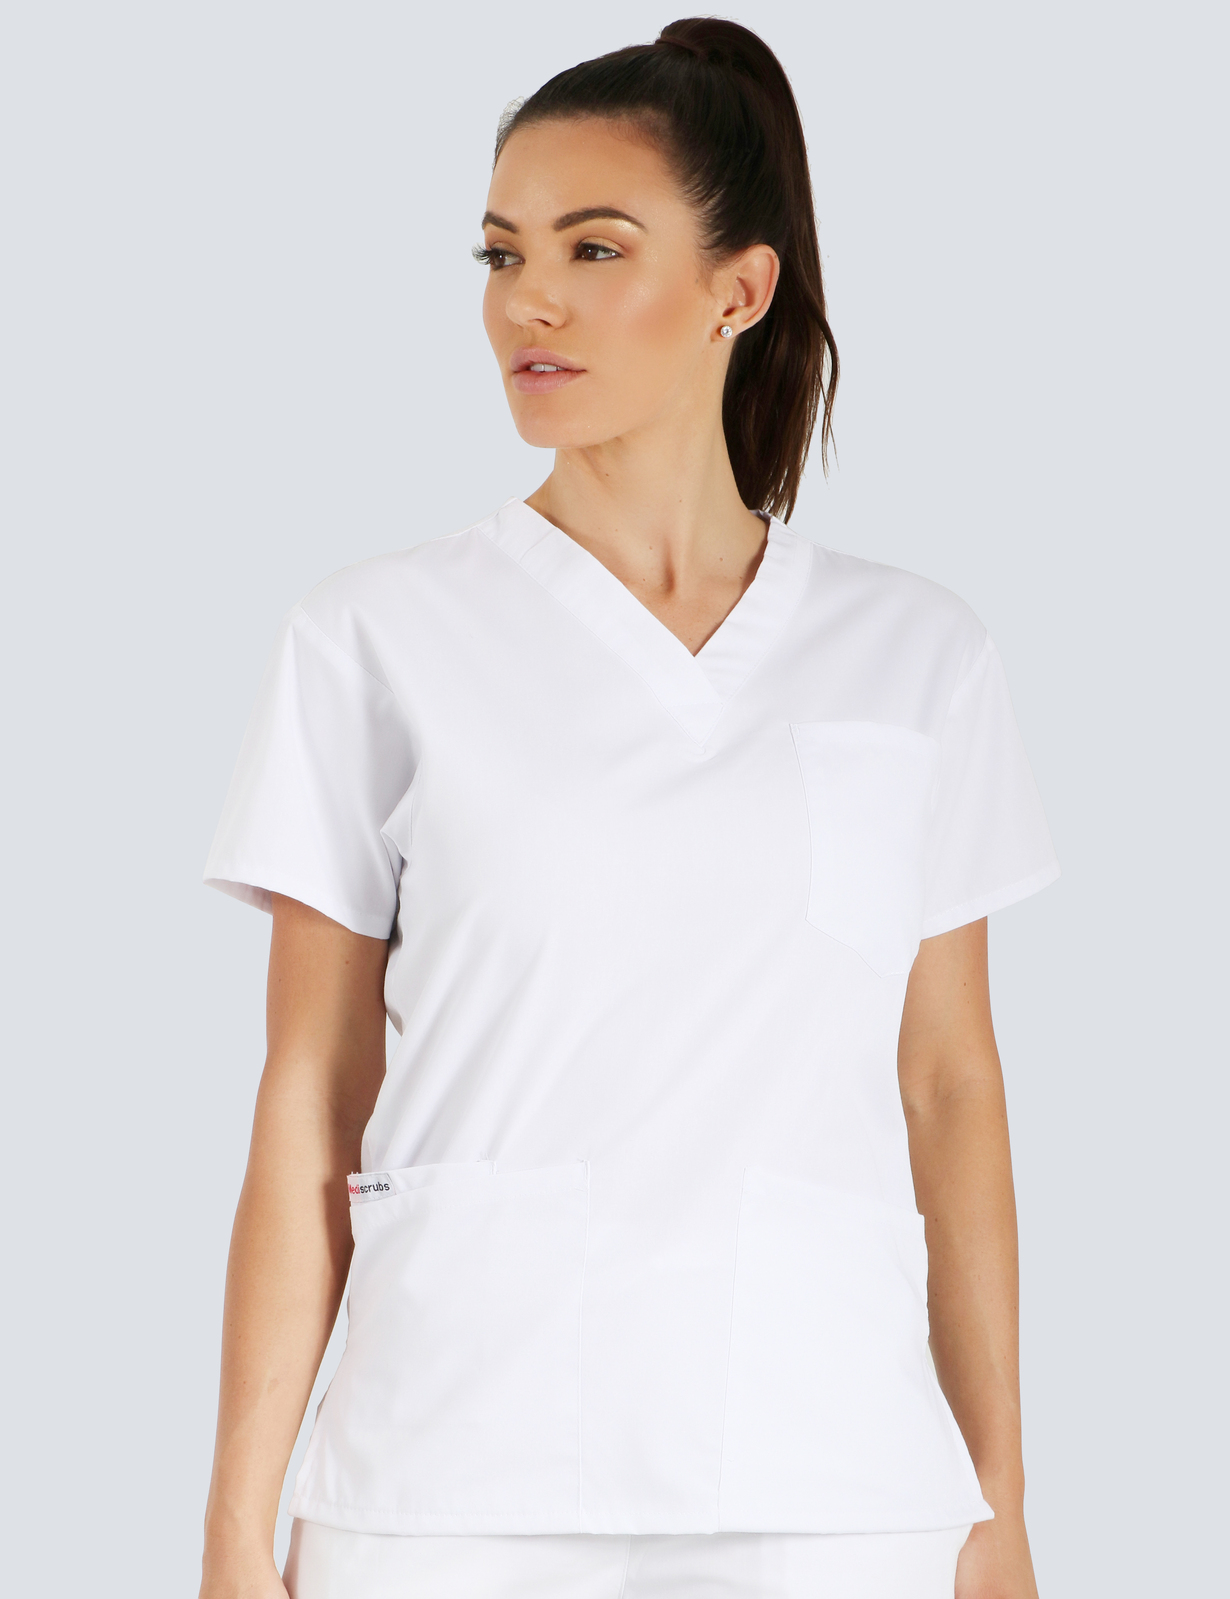 Queensland Children's Hospital Emergency Department Nurse Unit Manager Uniform Top Bundle  (4 Pocket Top  in White incl Logos)